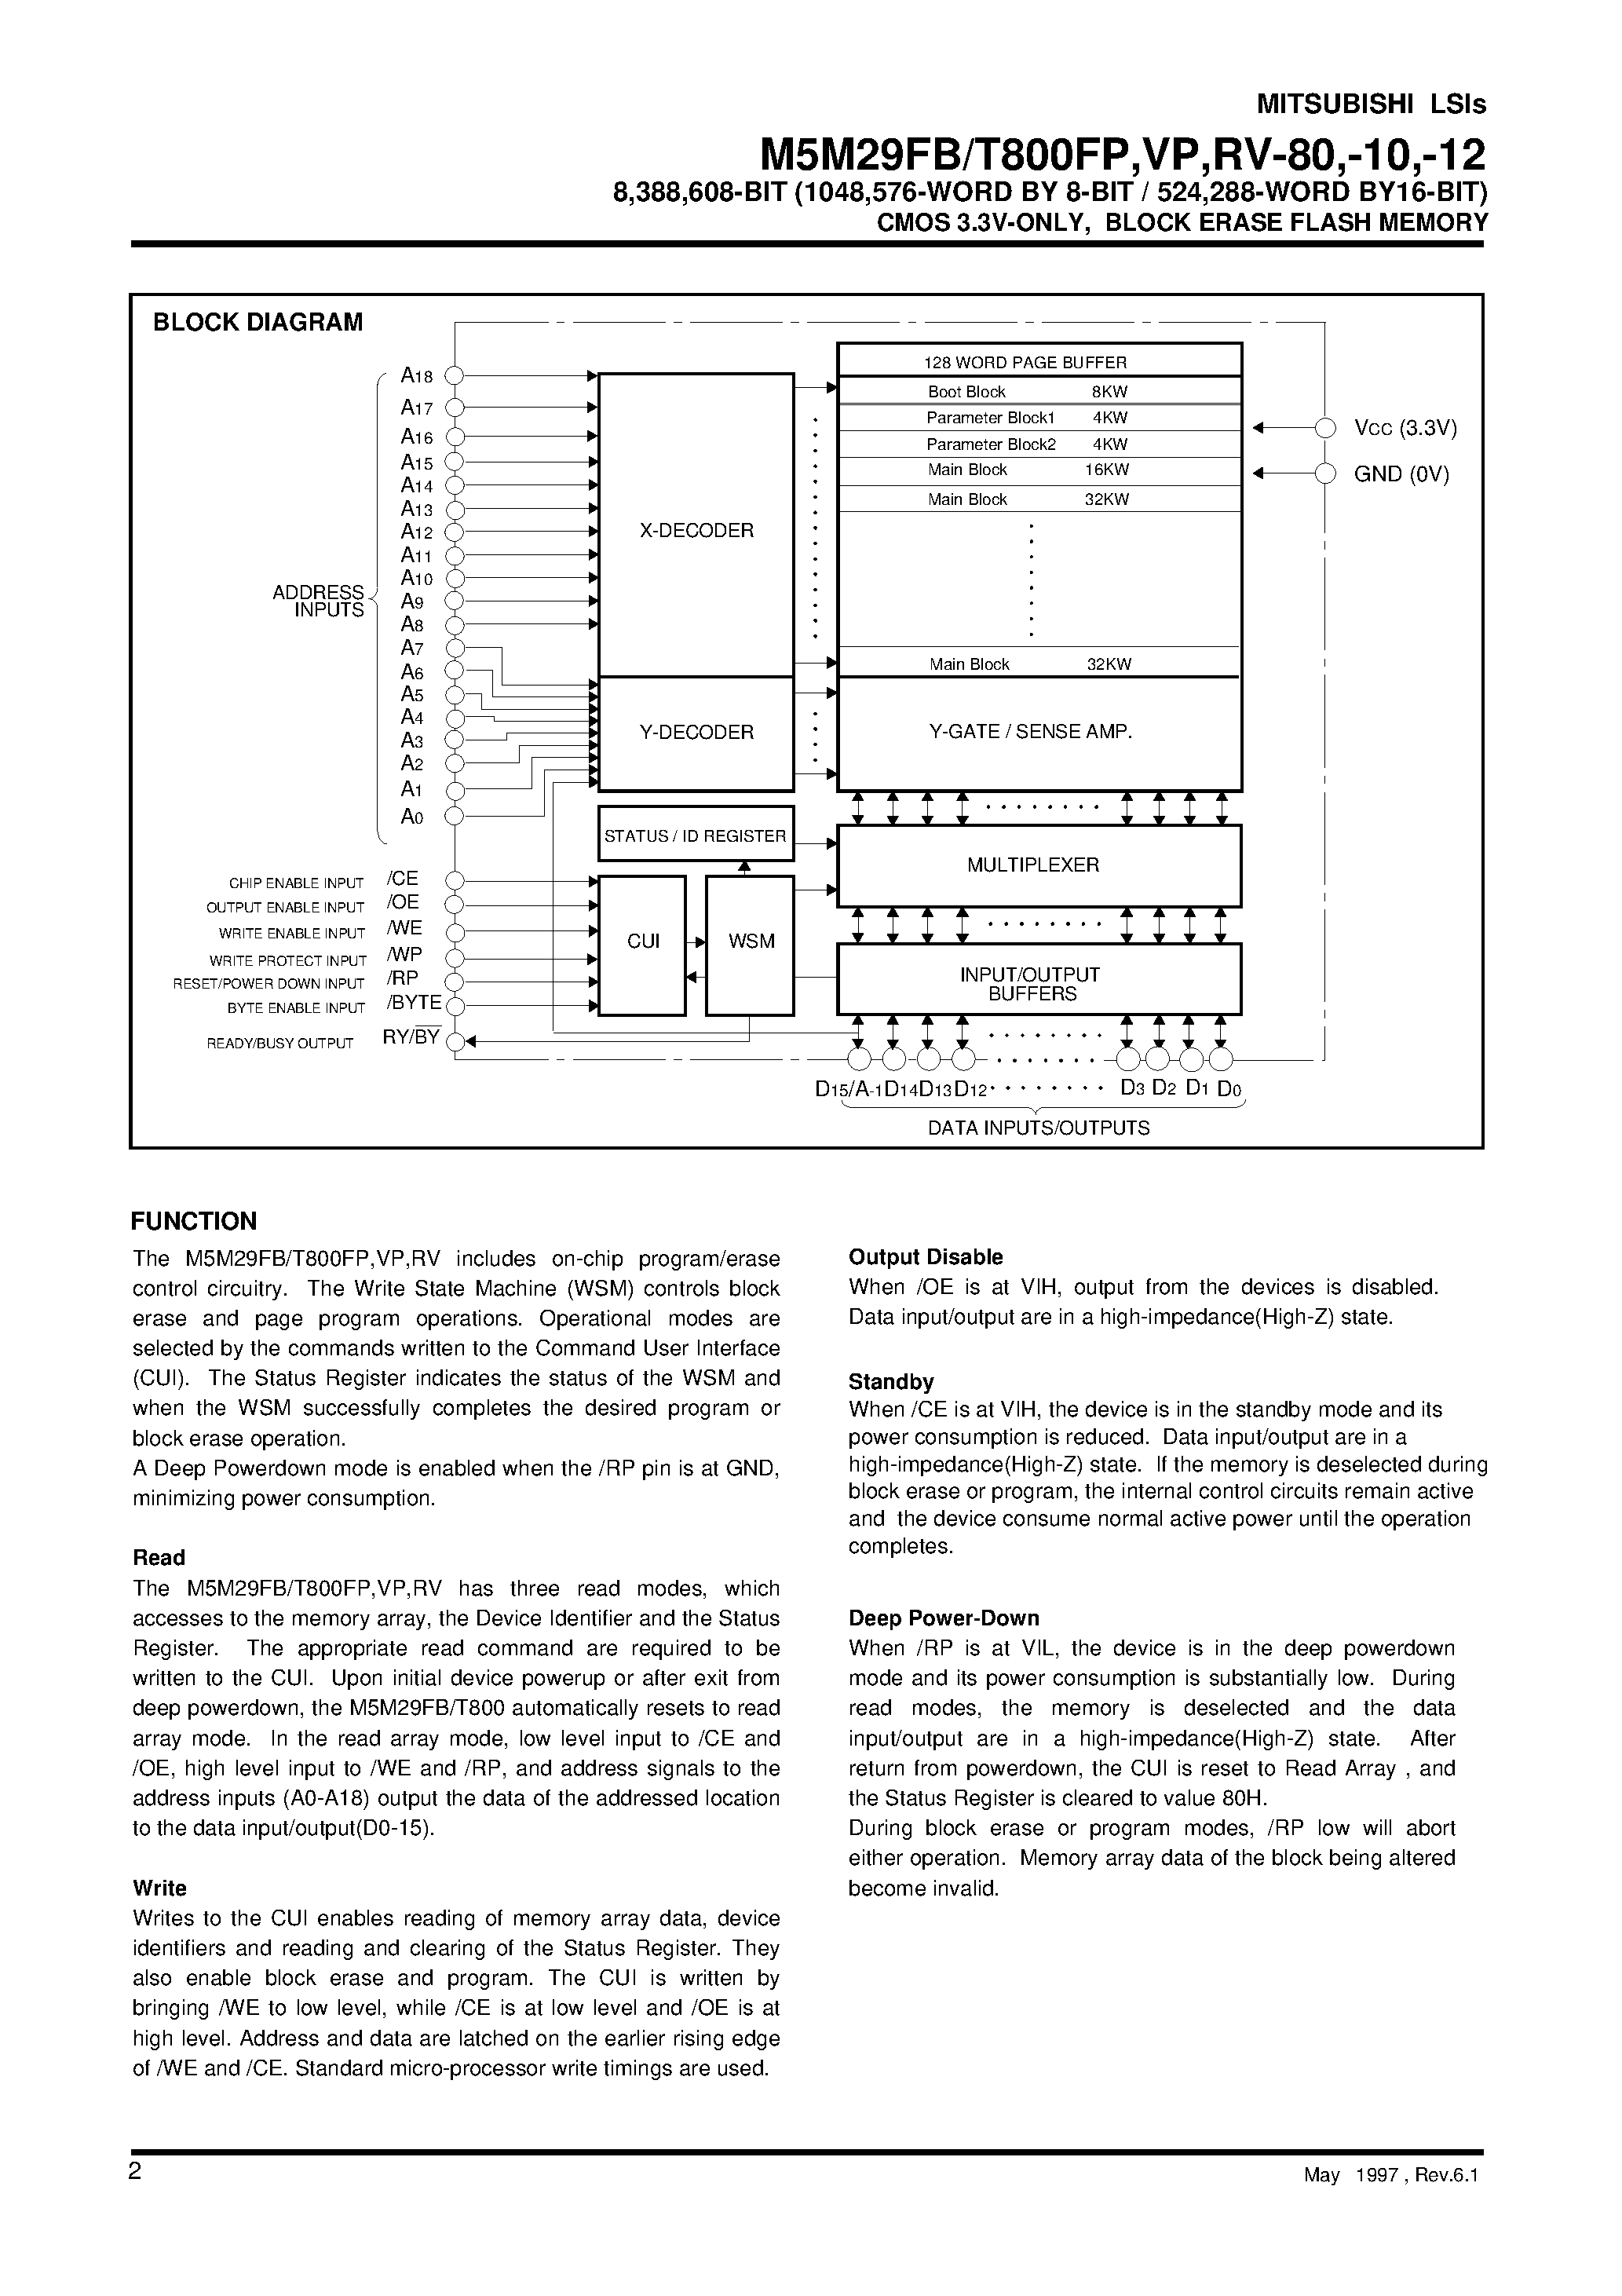 Datasheet M5M29FB800RV-12 - 8 /388 /608-BIT (1048 /576-576-WORD BY 8-BIT / 524 /288-WORD BY16-BIT)CMOS 3.3V-ONLY / BLOCK ERASE FLASH MEMORY page 2